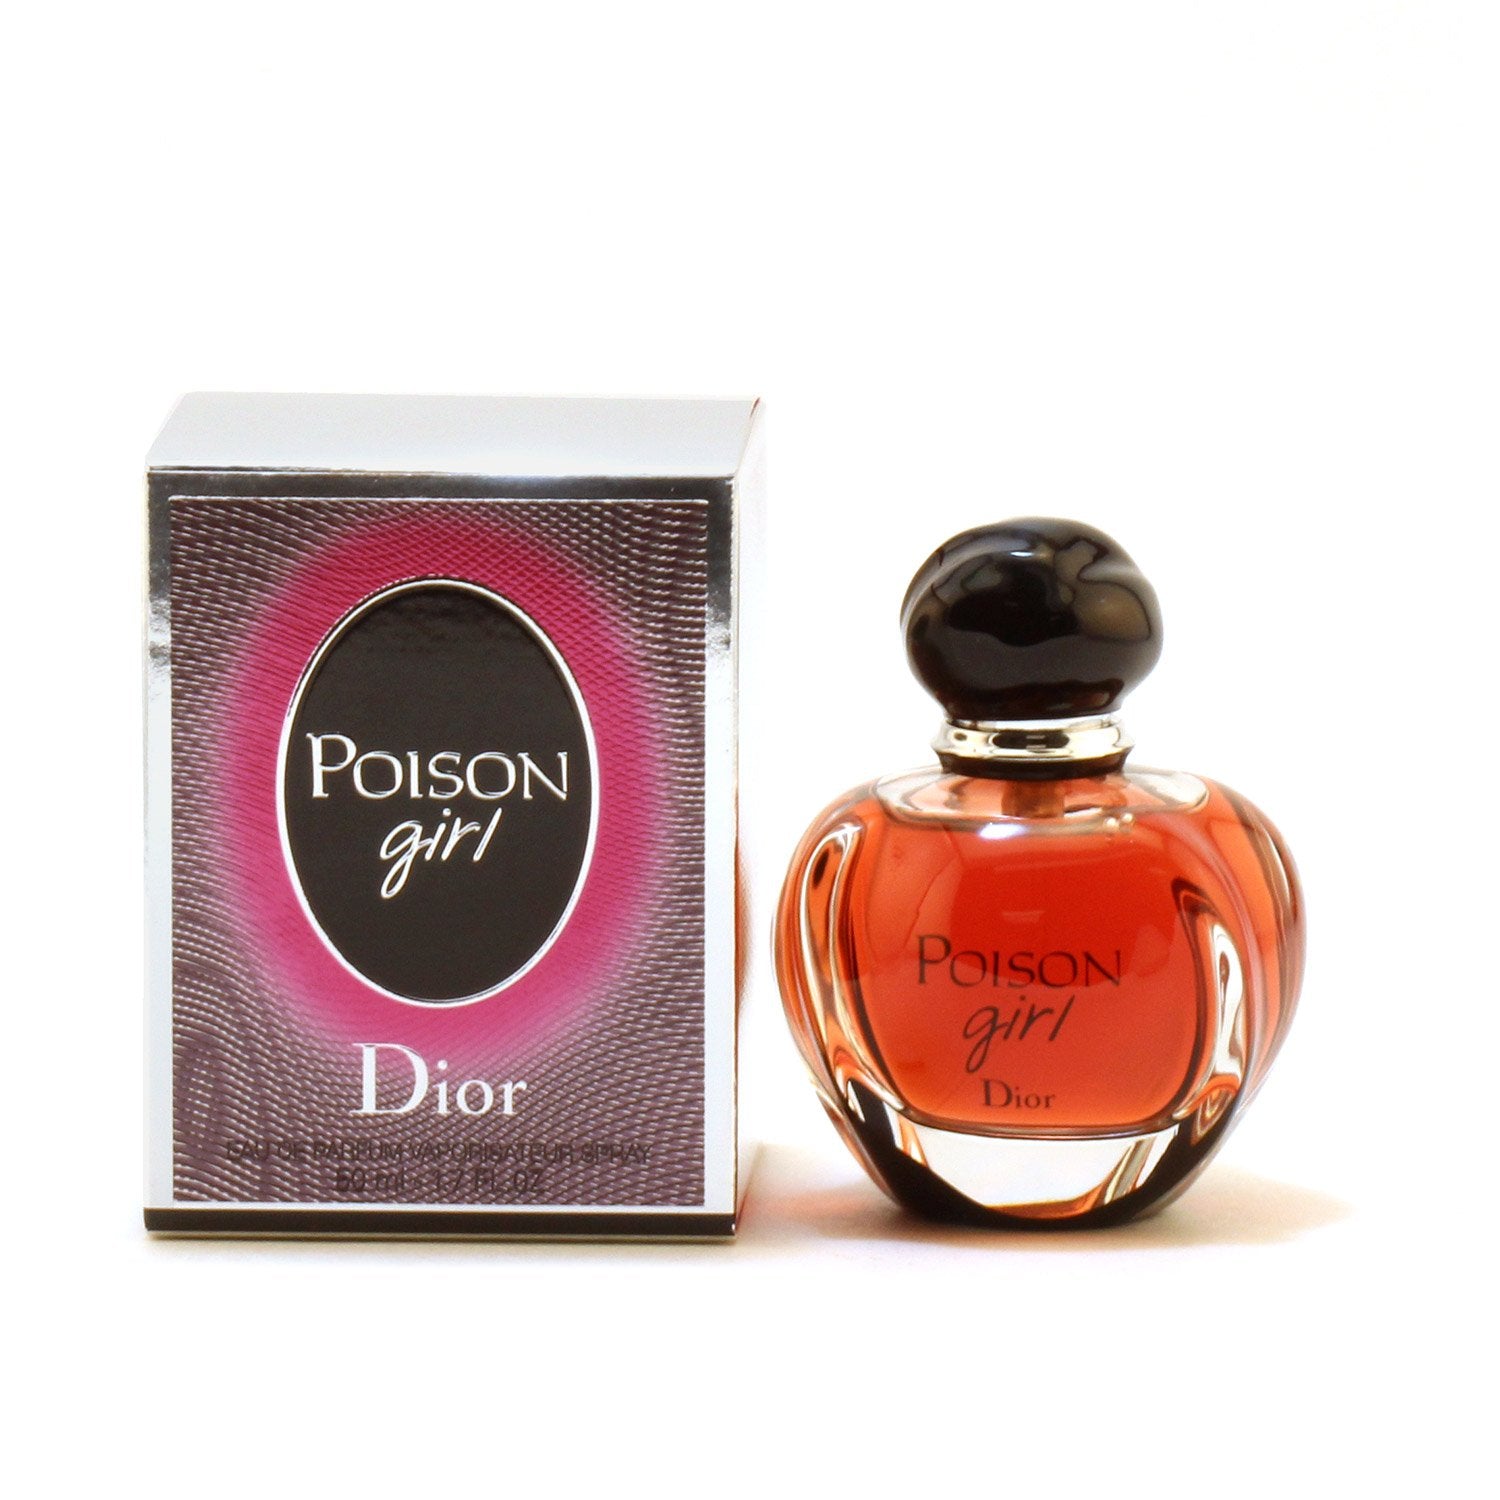 Mua Christian Dior Poison Girl Eau de Toilette 30ml spray trên Amazon Anh  chính hãng 2023  Giaonhan247